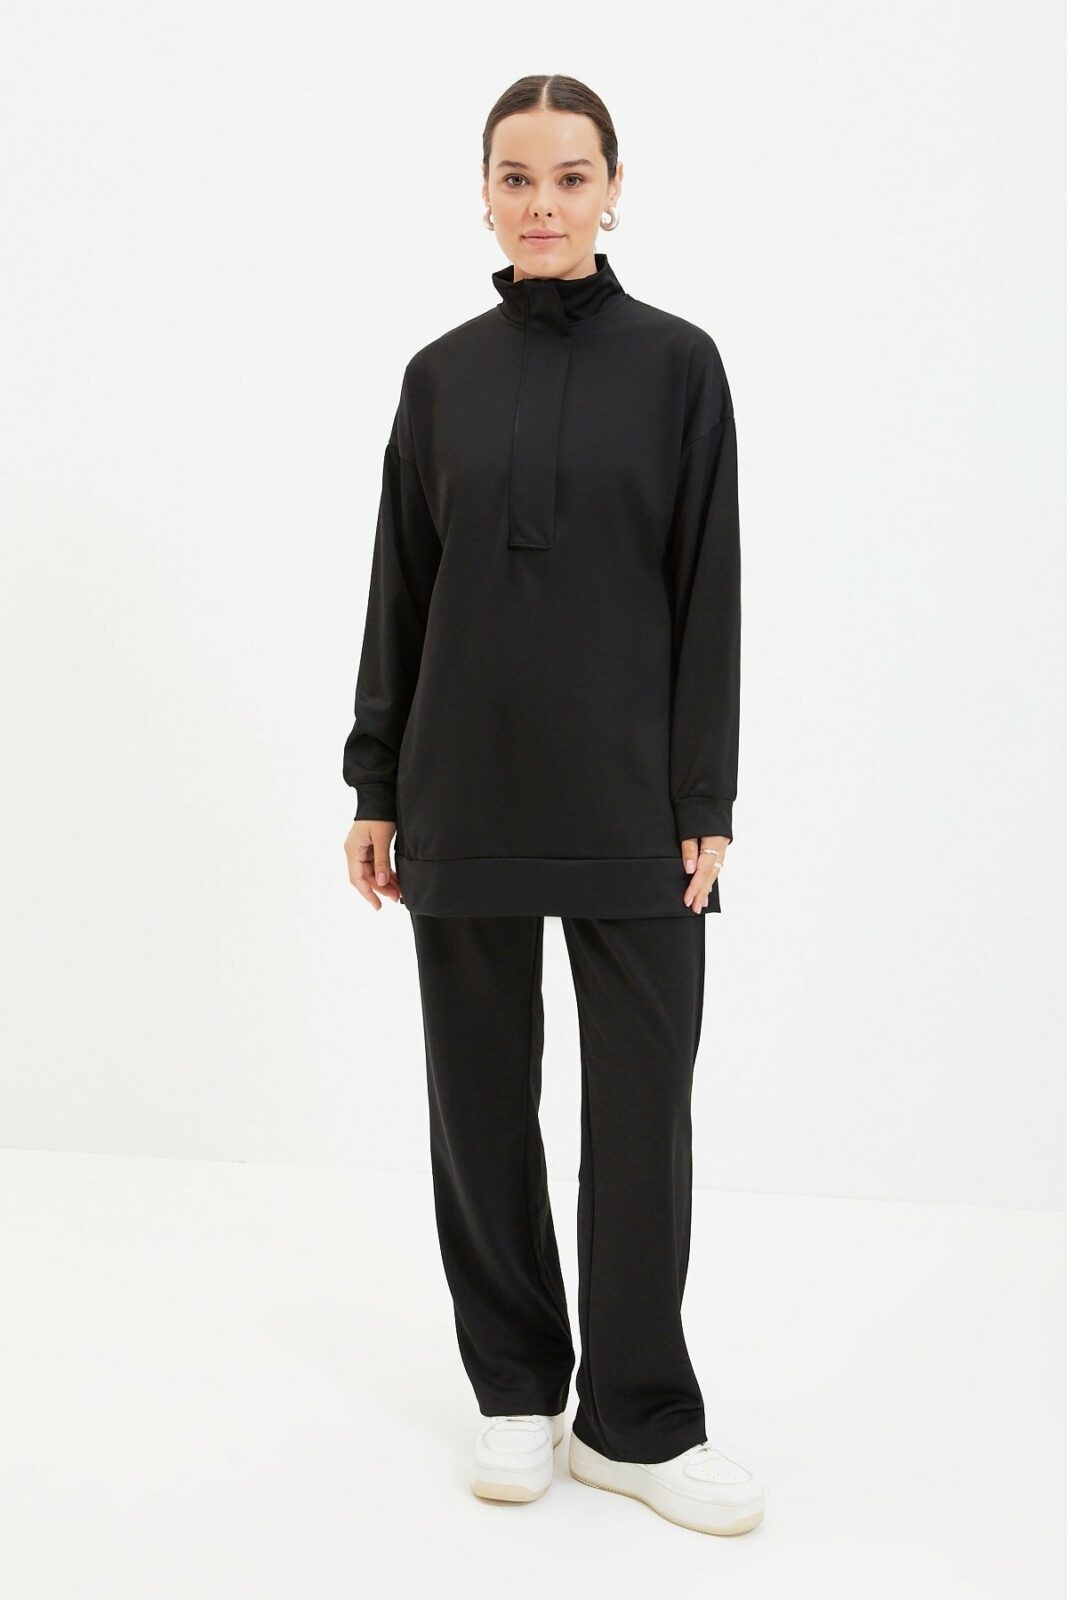 Trendyol Sweatsuit Set - Black